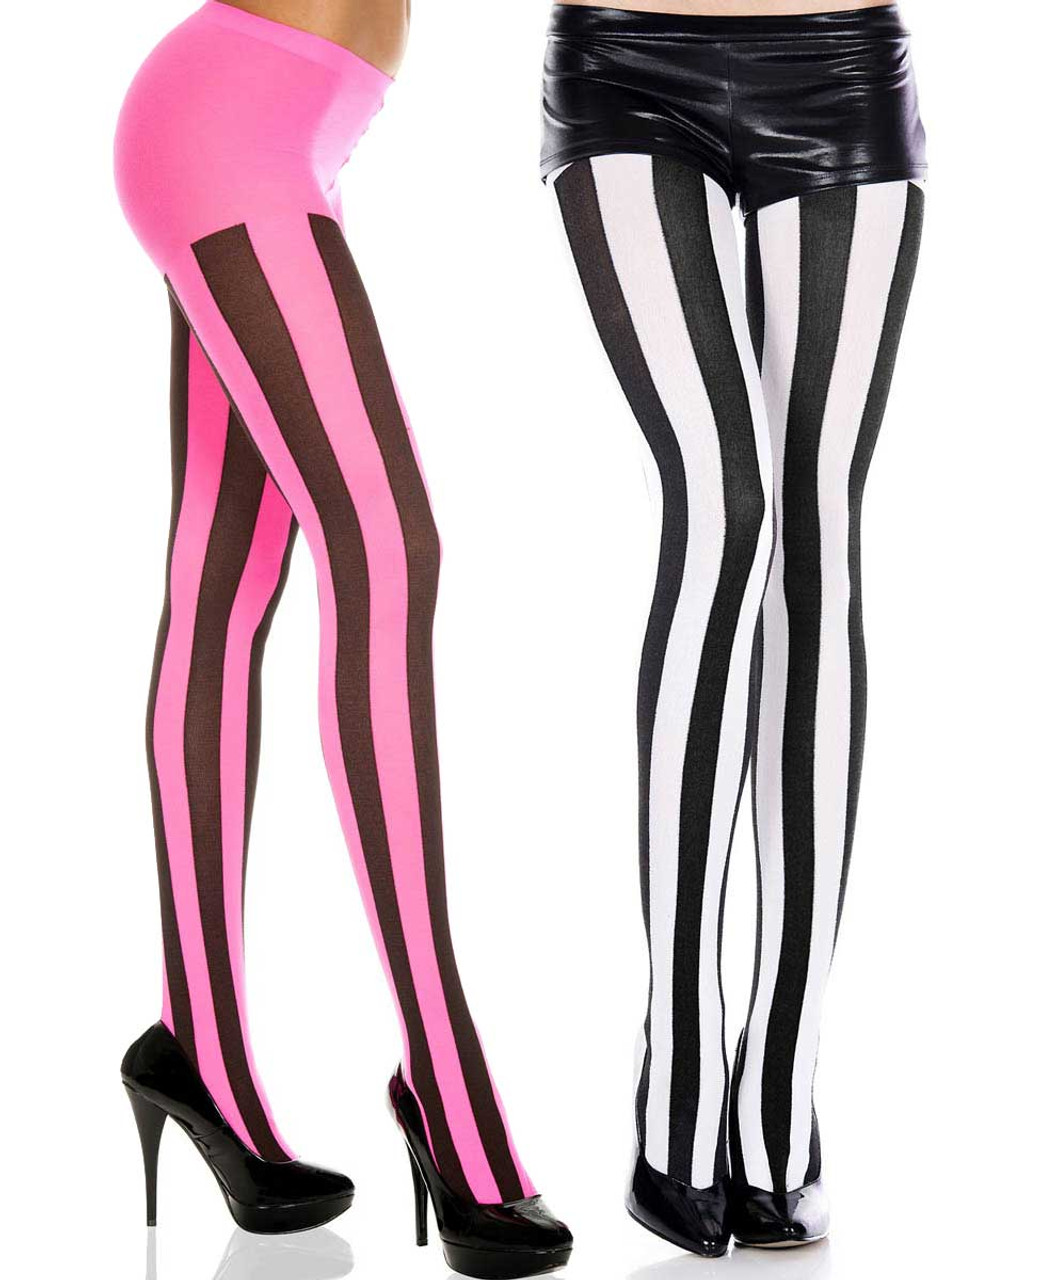 Vertical Striped Black & White Pantyhose Tights